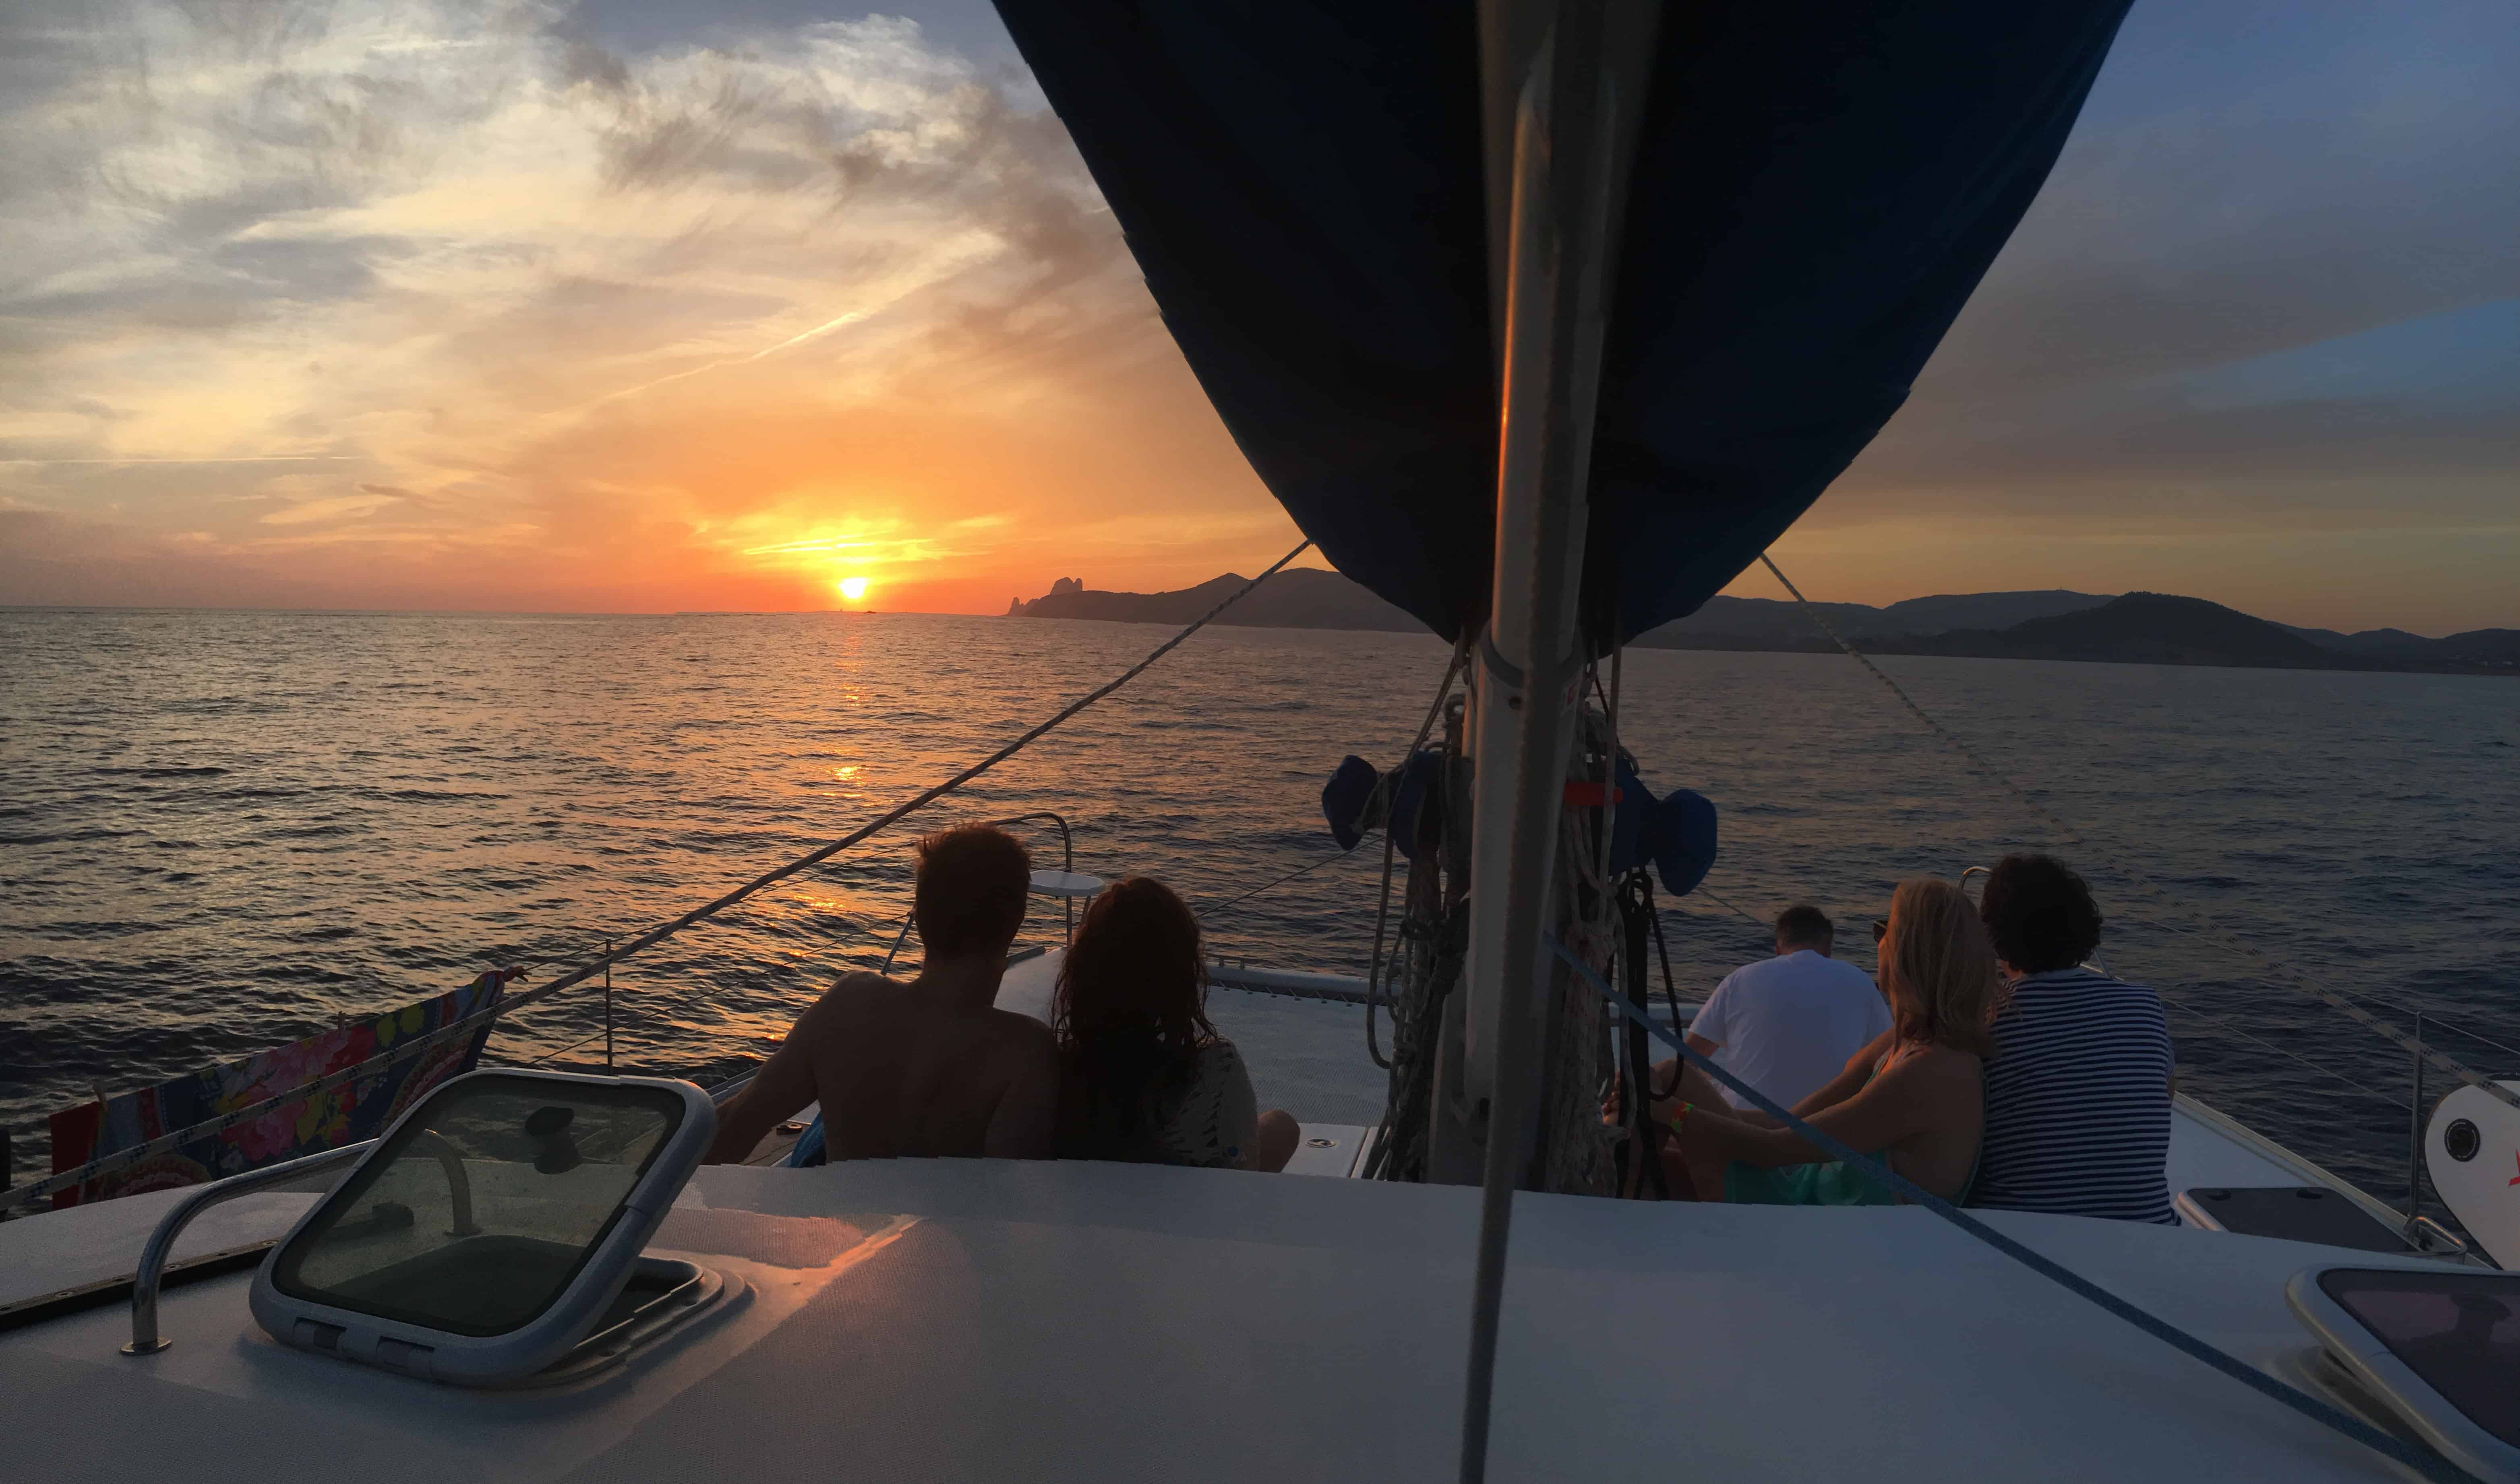 Catamaran rental Ibiza, people enjoying the sunset on board